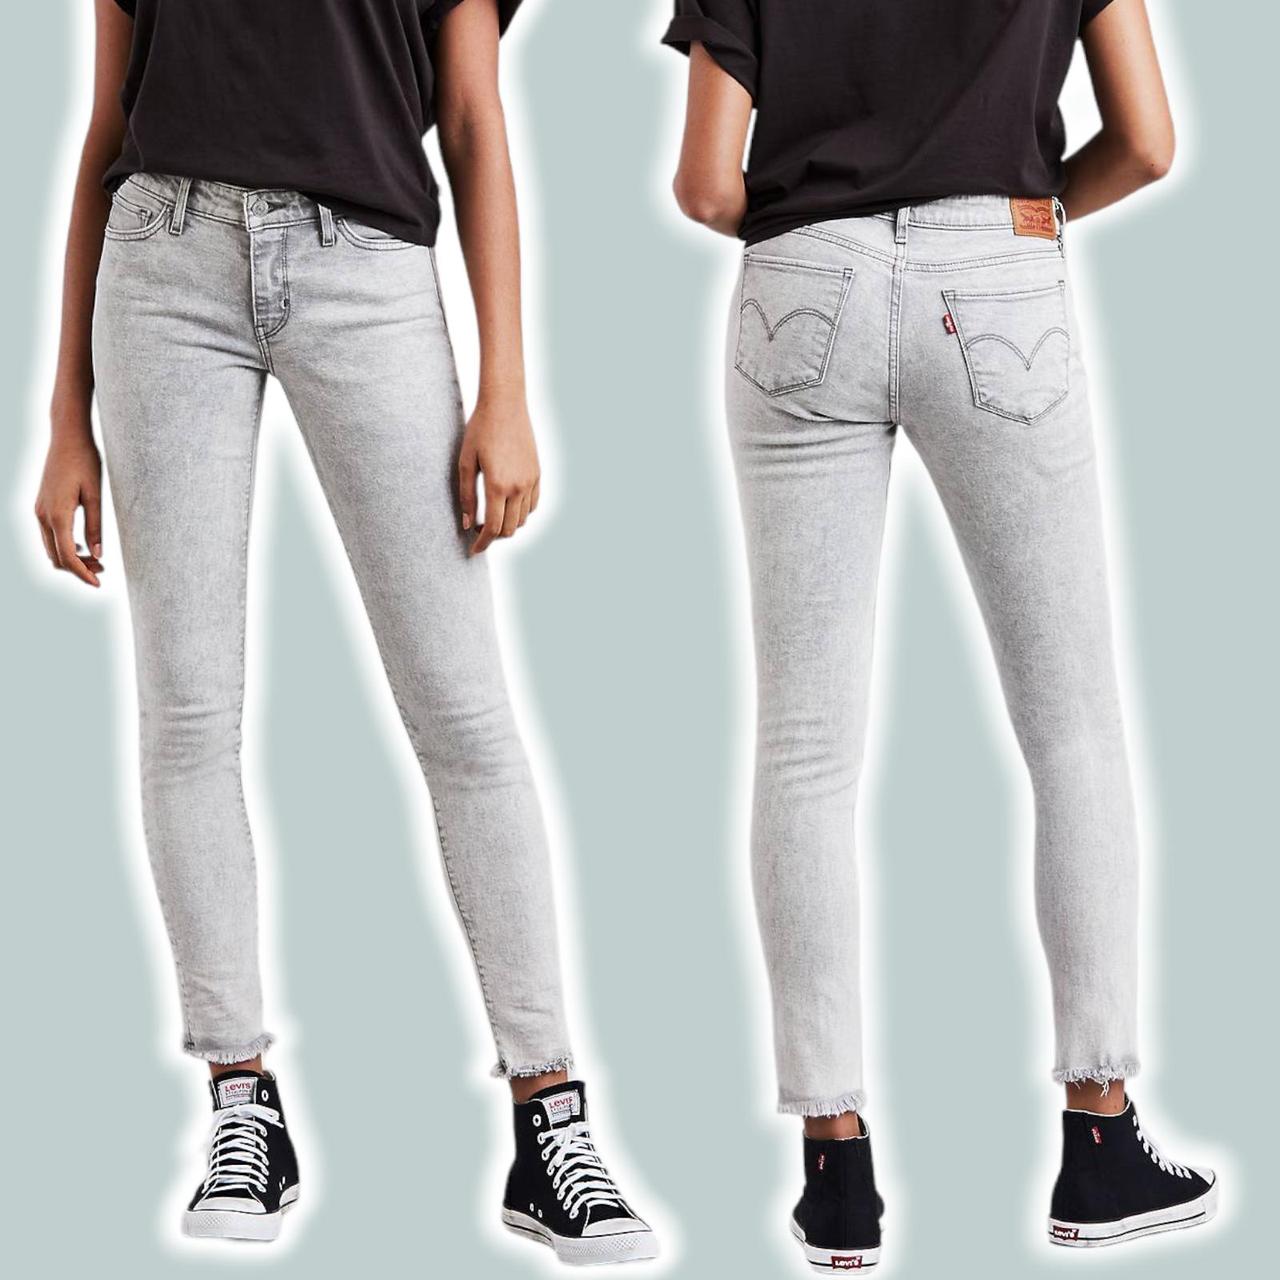 Levi's Women's 711 Skinny Jeans 